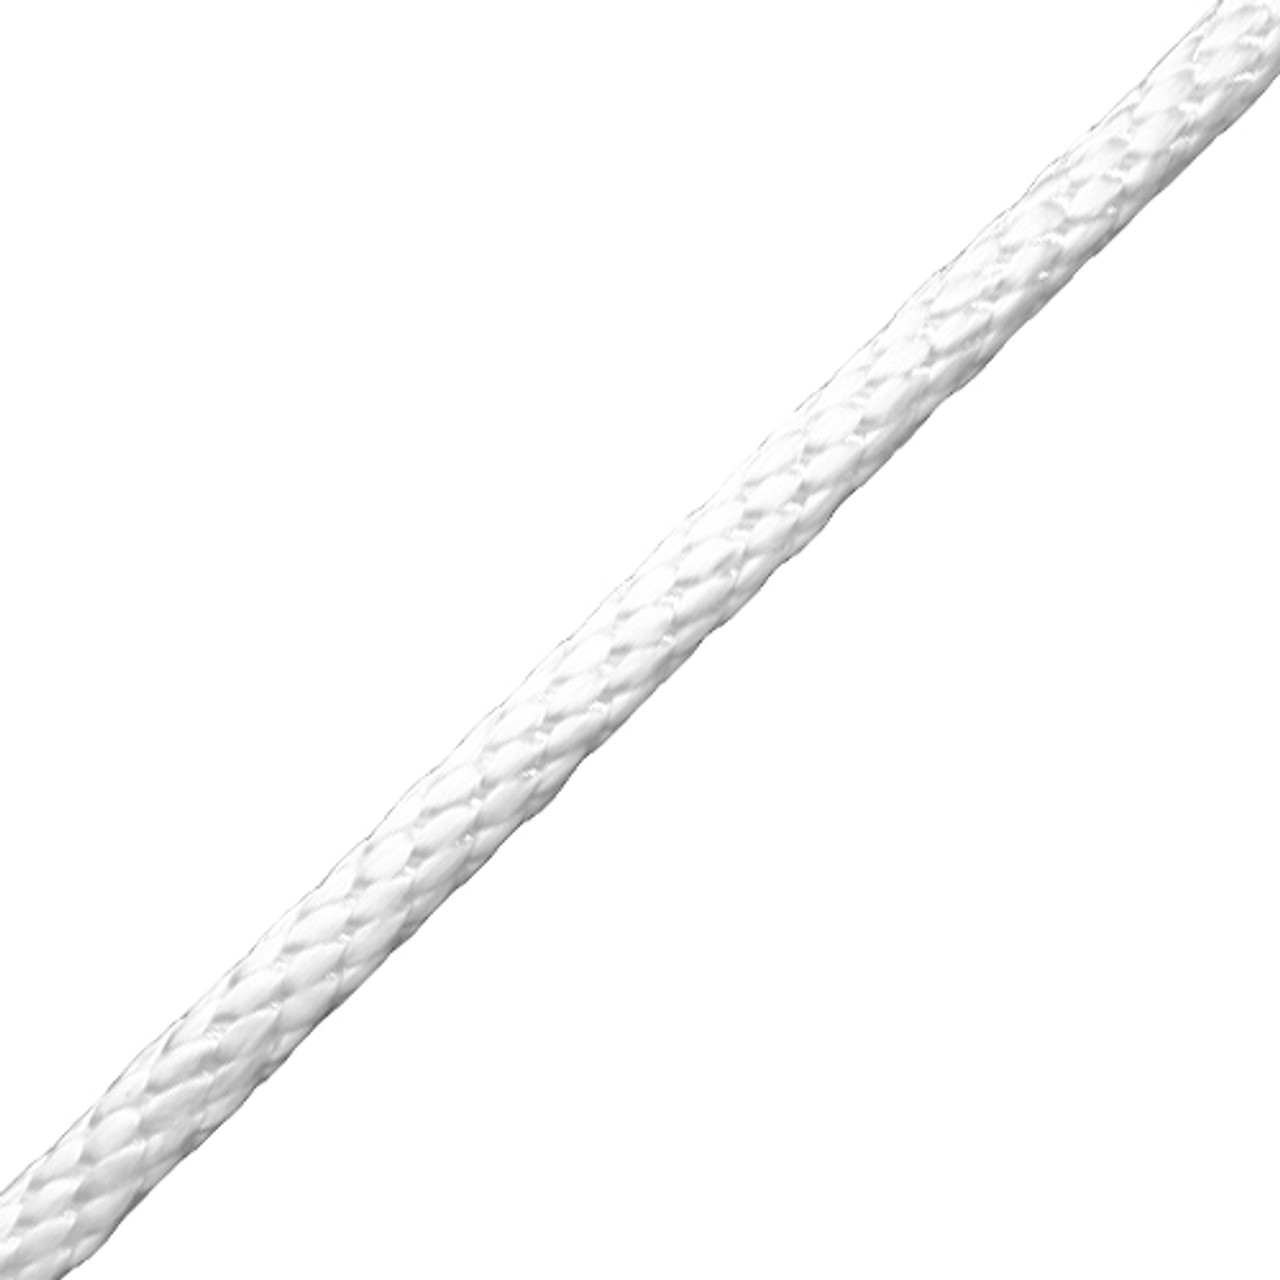 CWC 5/16 Nylon Double Braid Rope  3263 lbs Breaking Strength - #345025